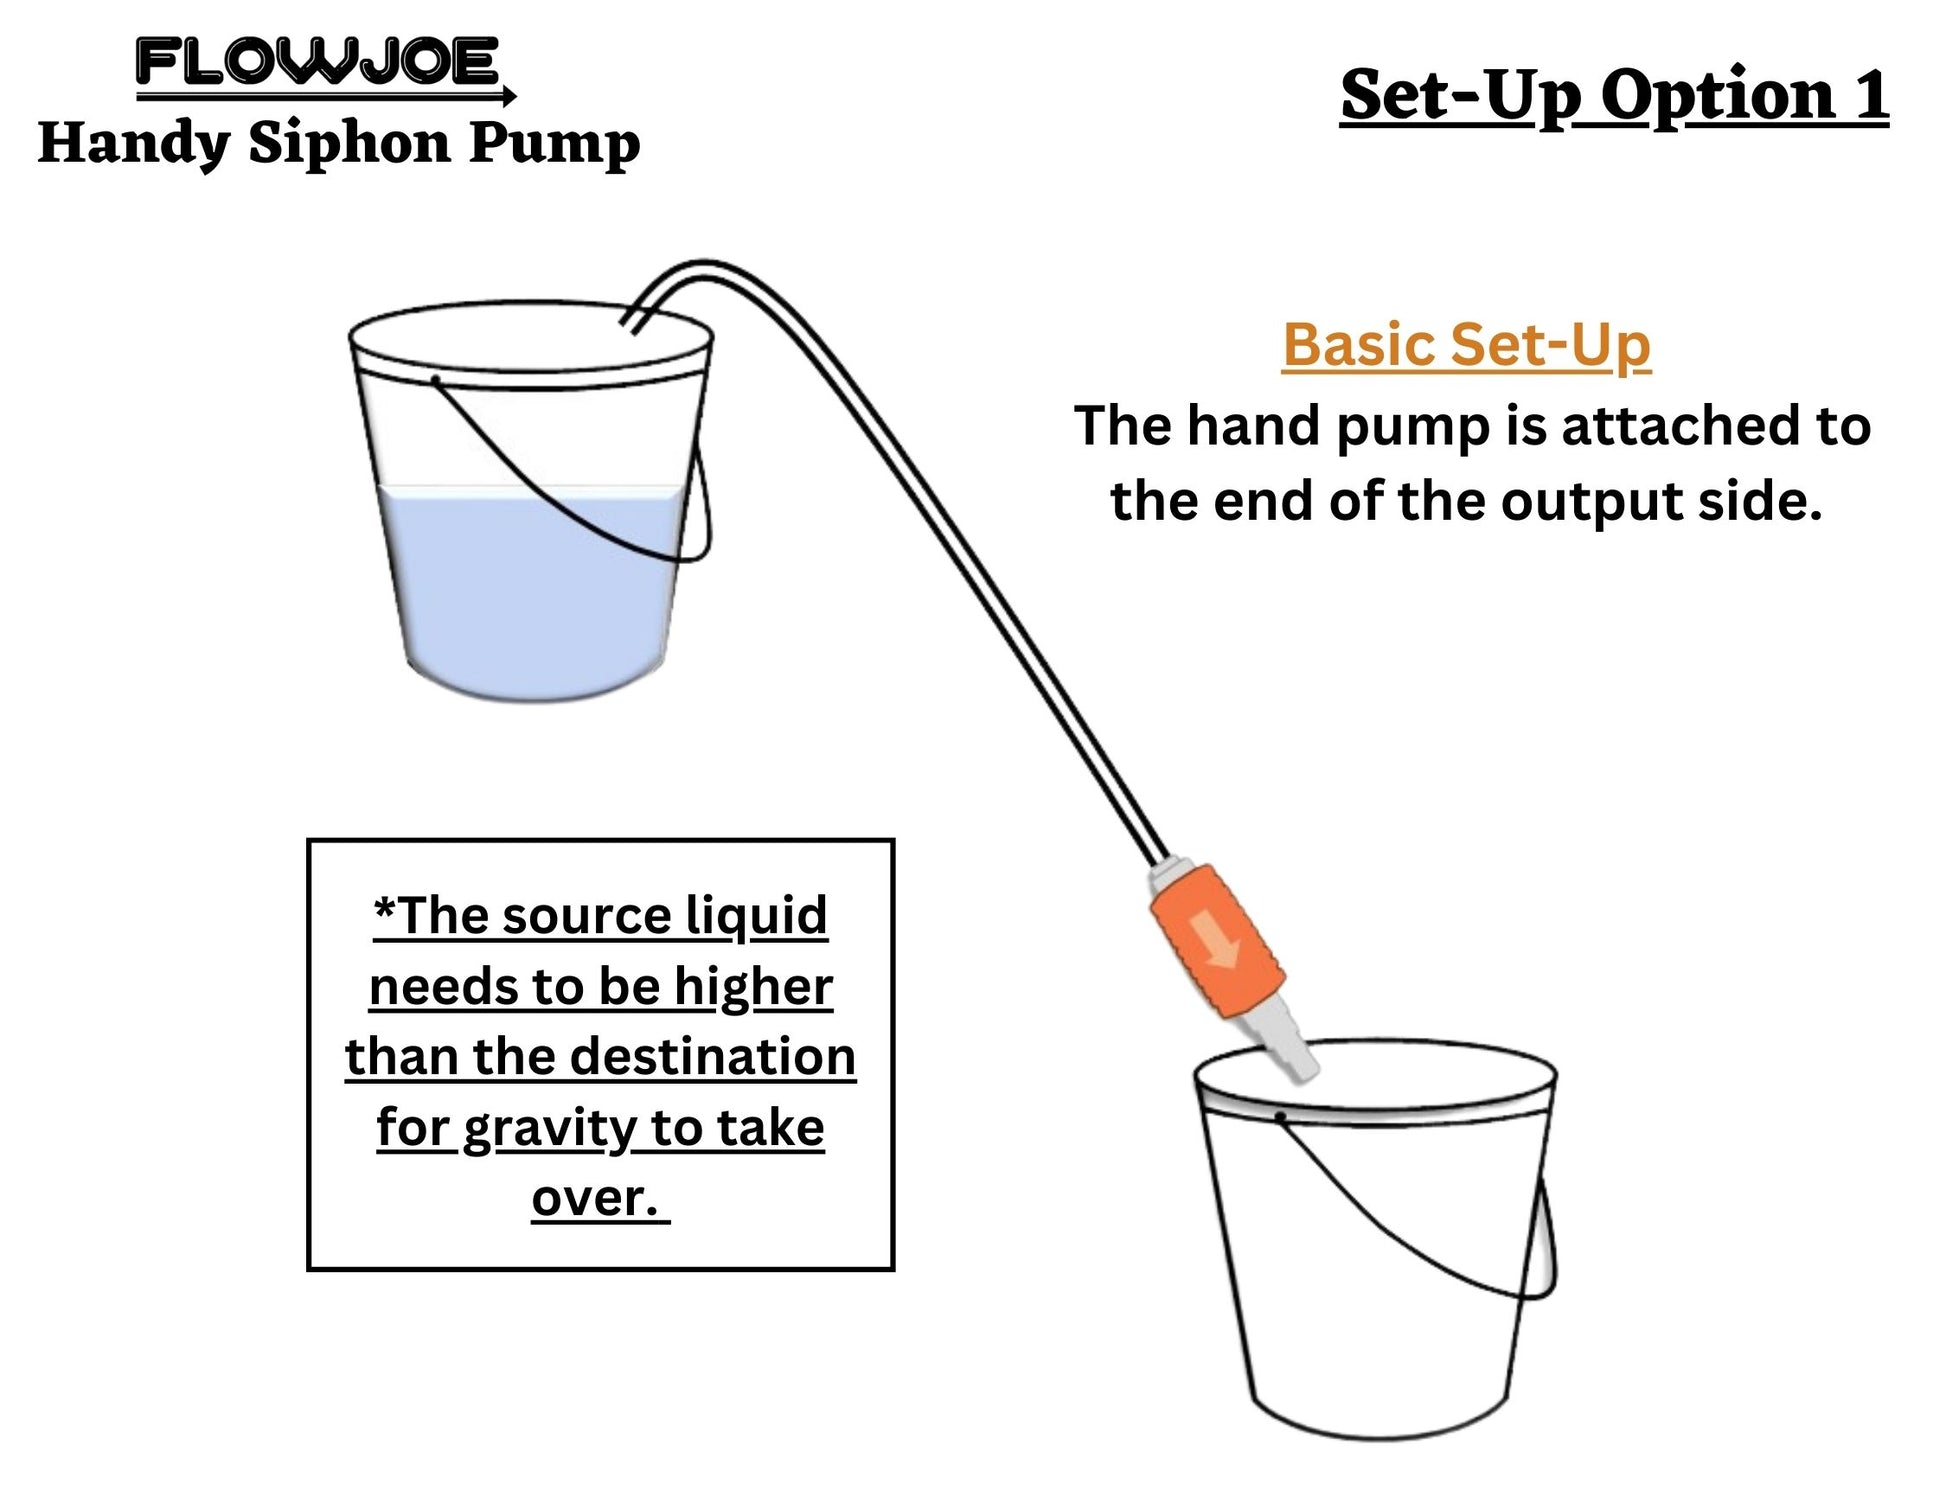 Handy siphon pump by FlowJoe set up option one, basic set up source liquid higher than destination